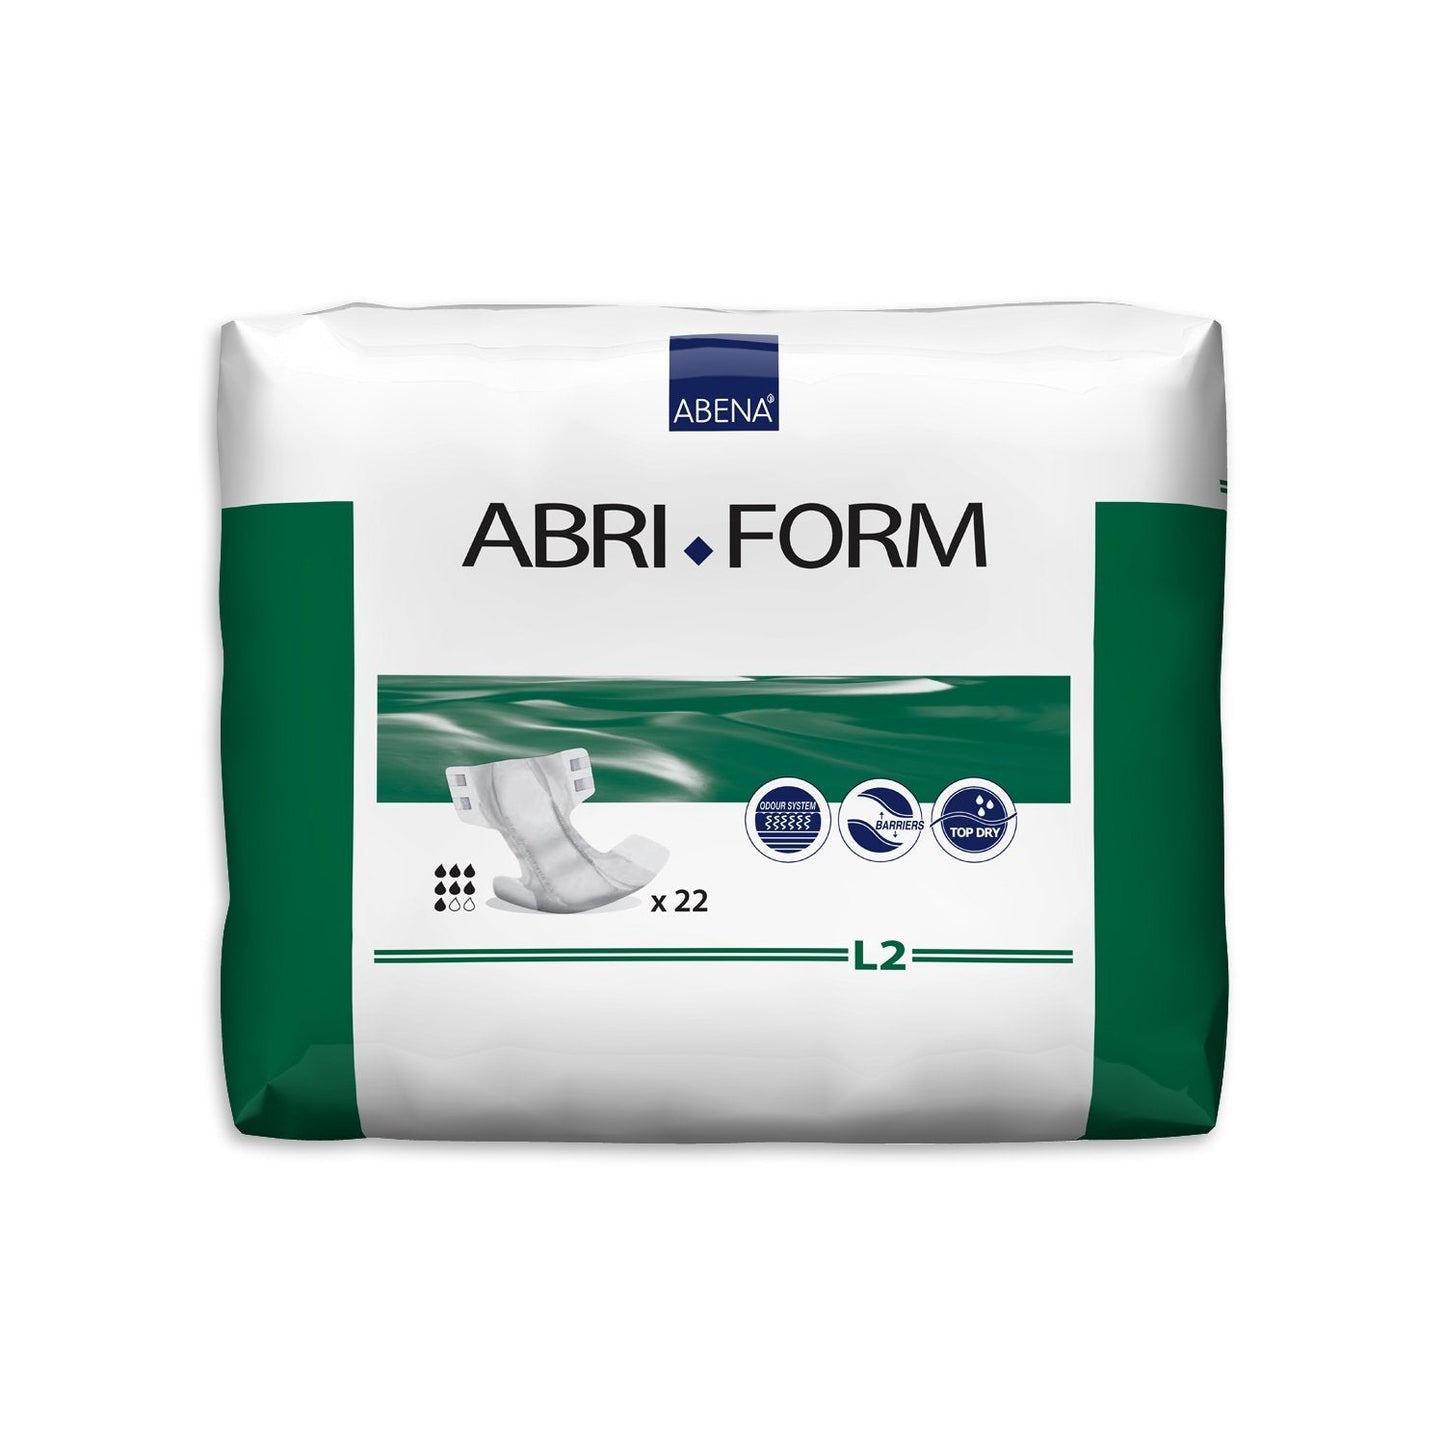 Abri-Form Comfort L2 Green 2800ml 100-150cm - CT of 88